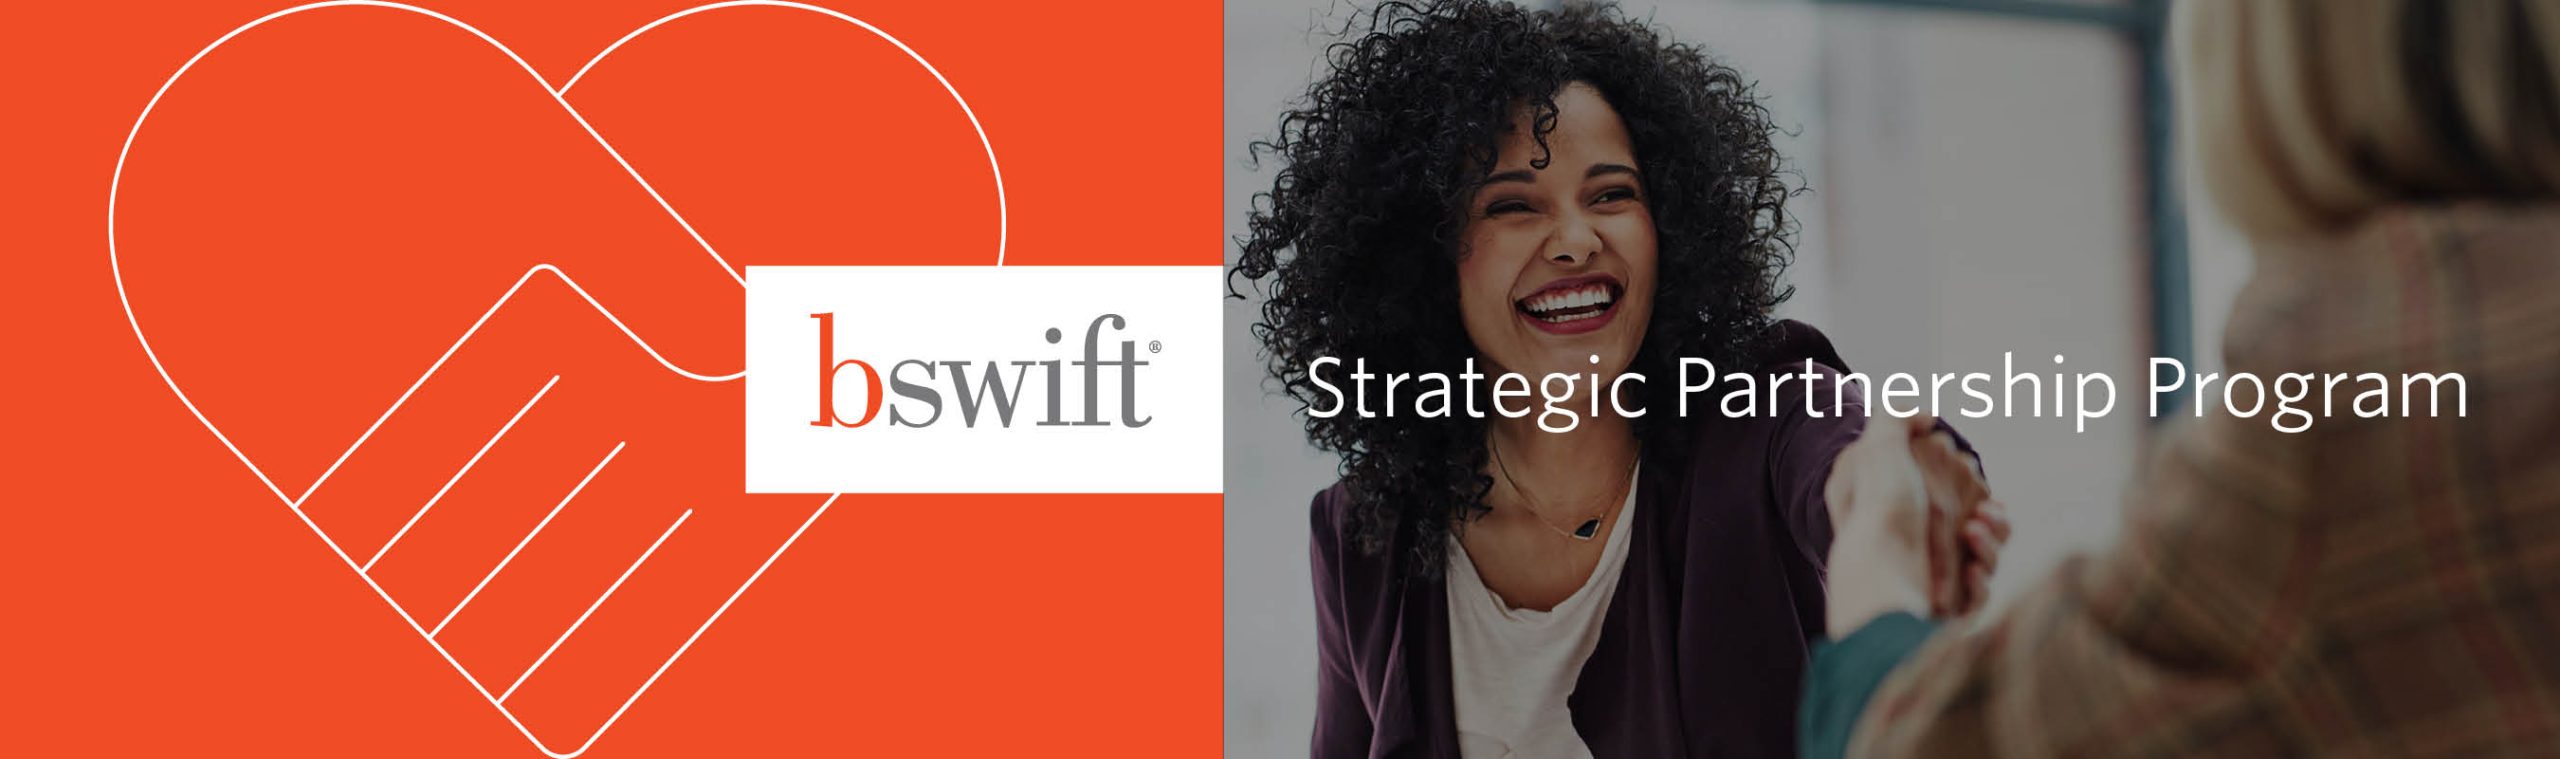 bswift's Strategic Partnership Program